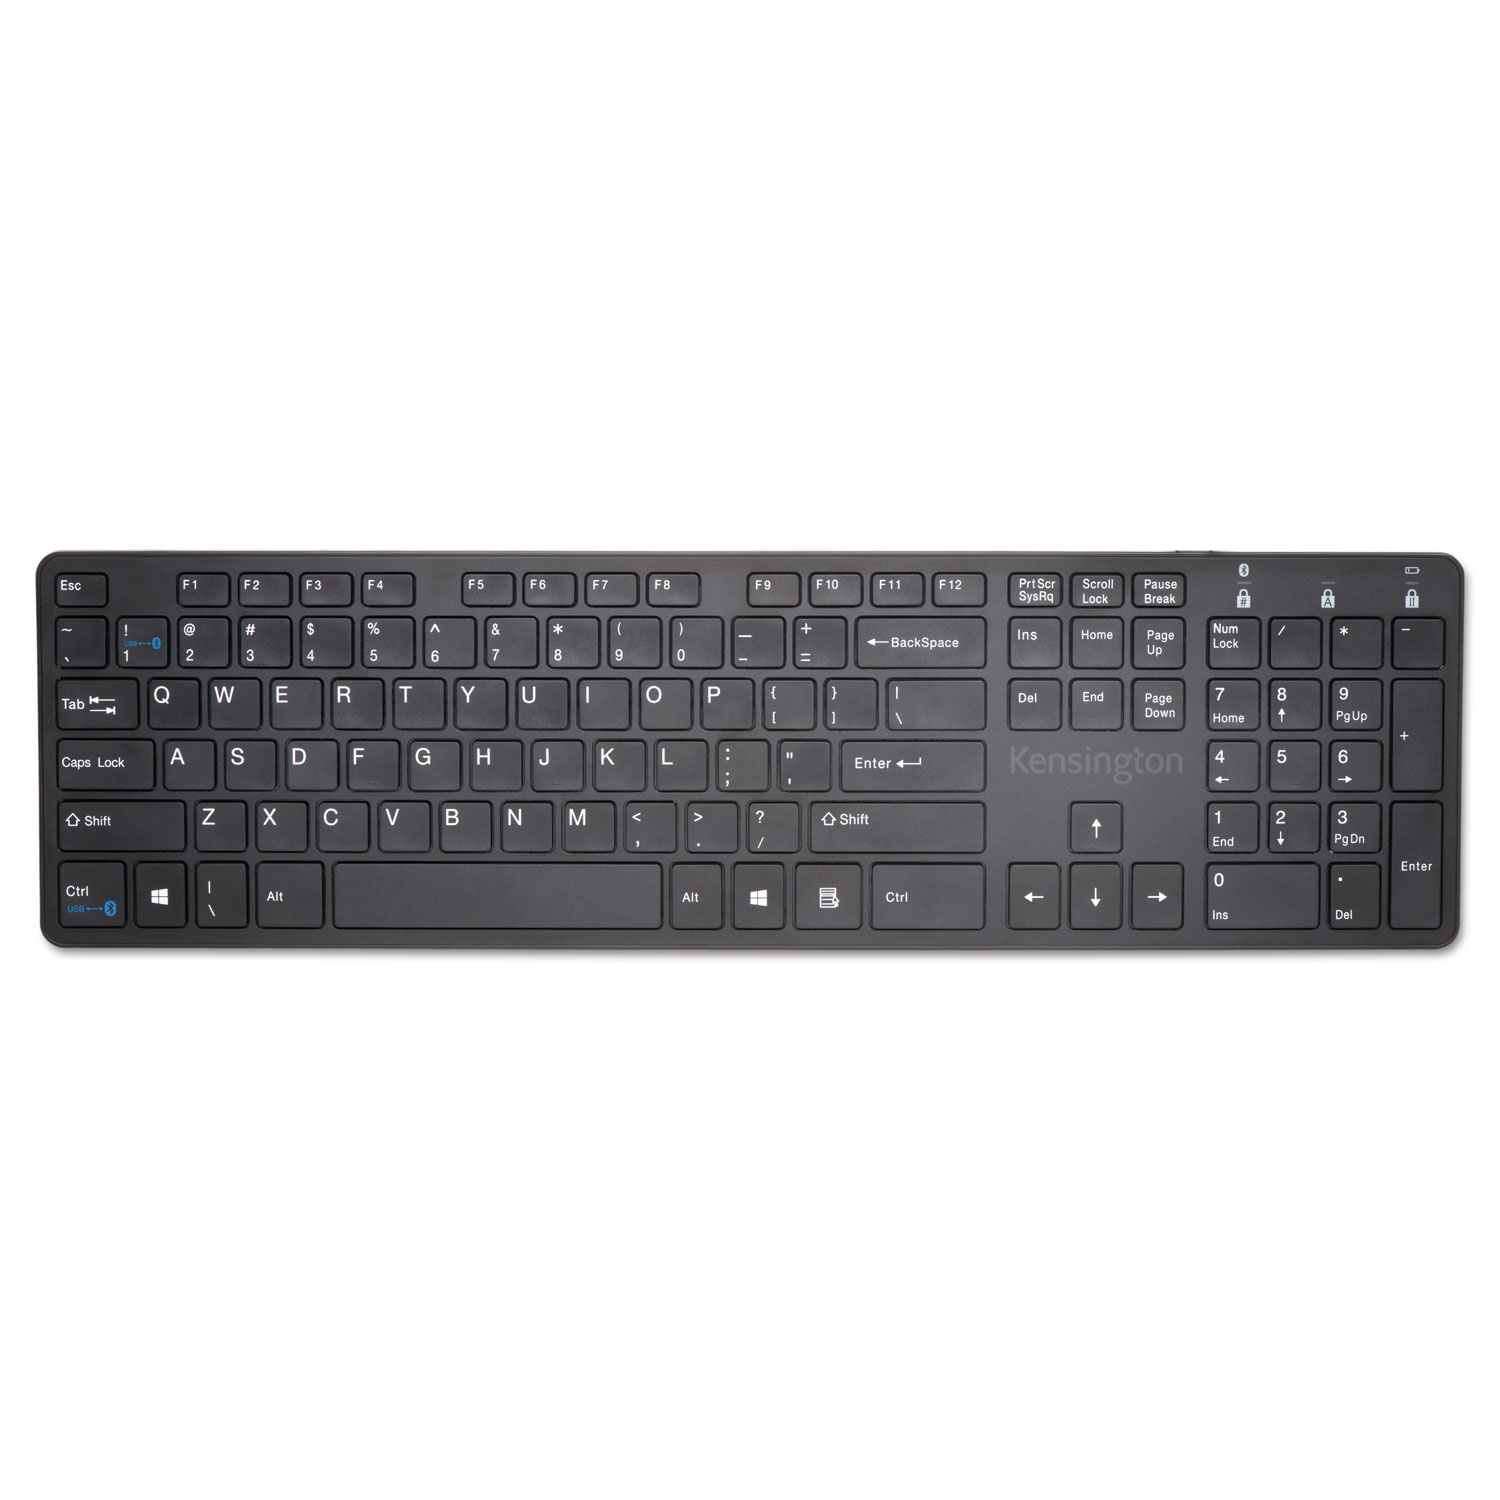 KP400 Switchable Keyboard, 17 1/2 x 4 9/10 x 7/10, Black